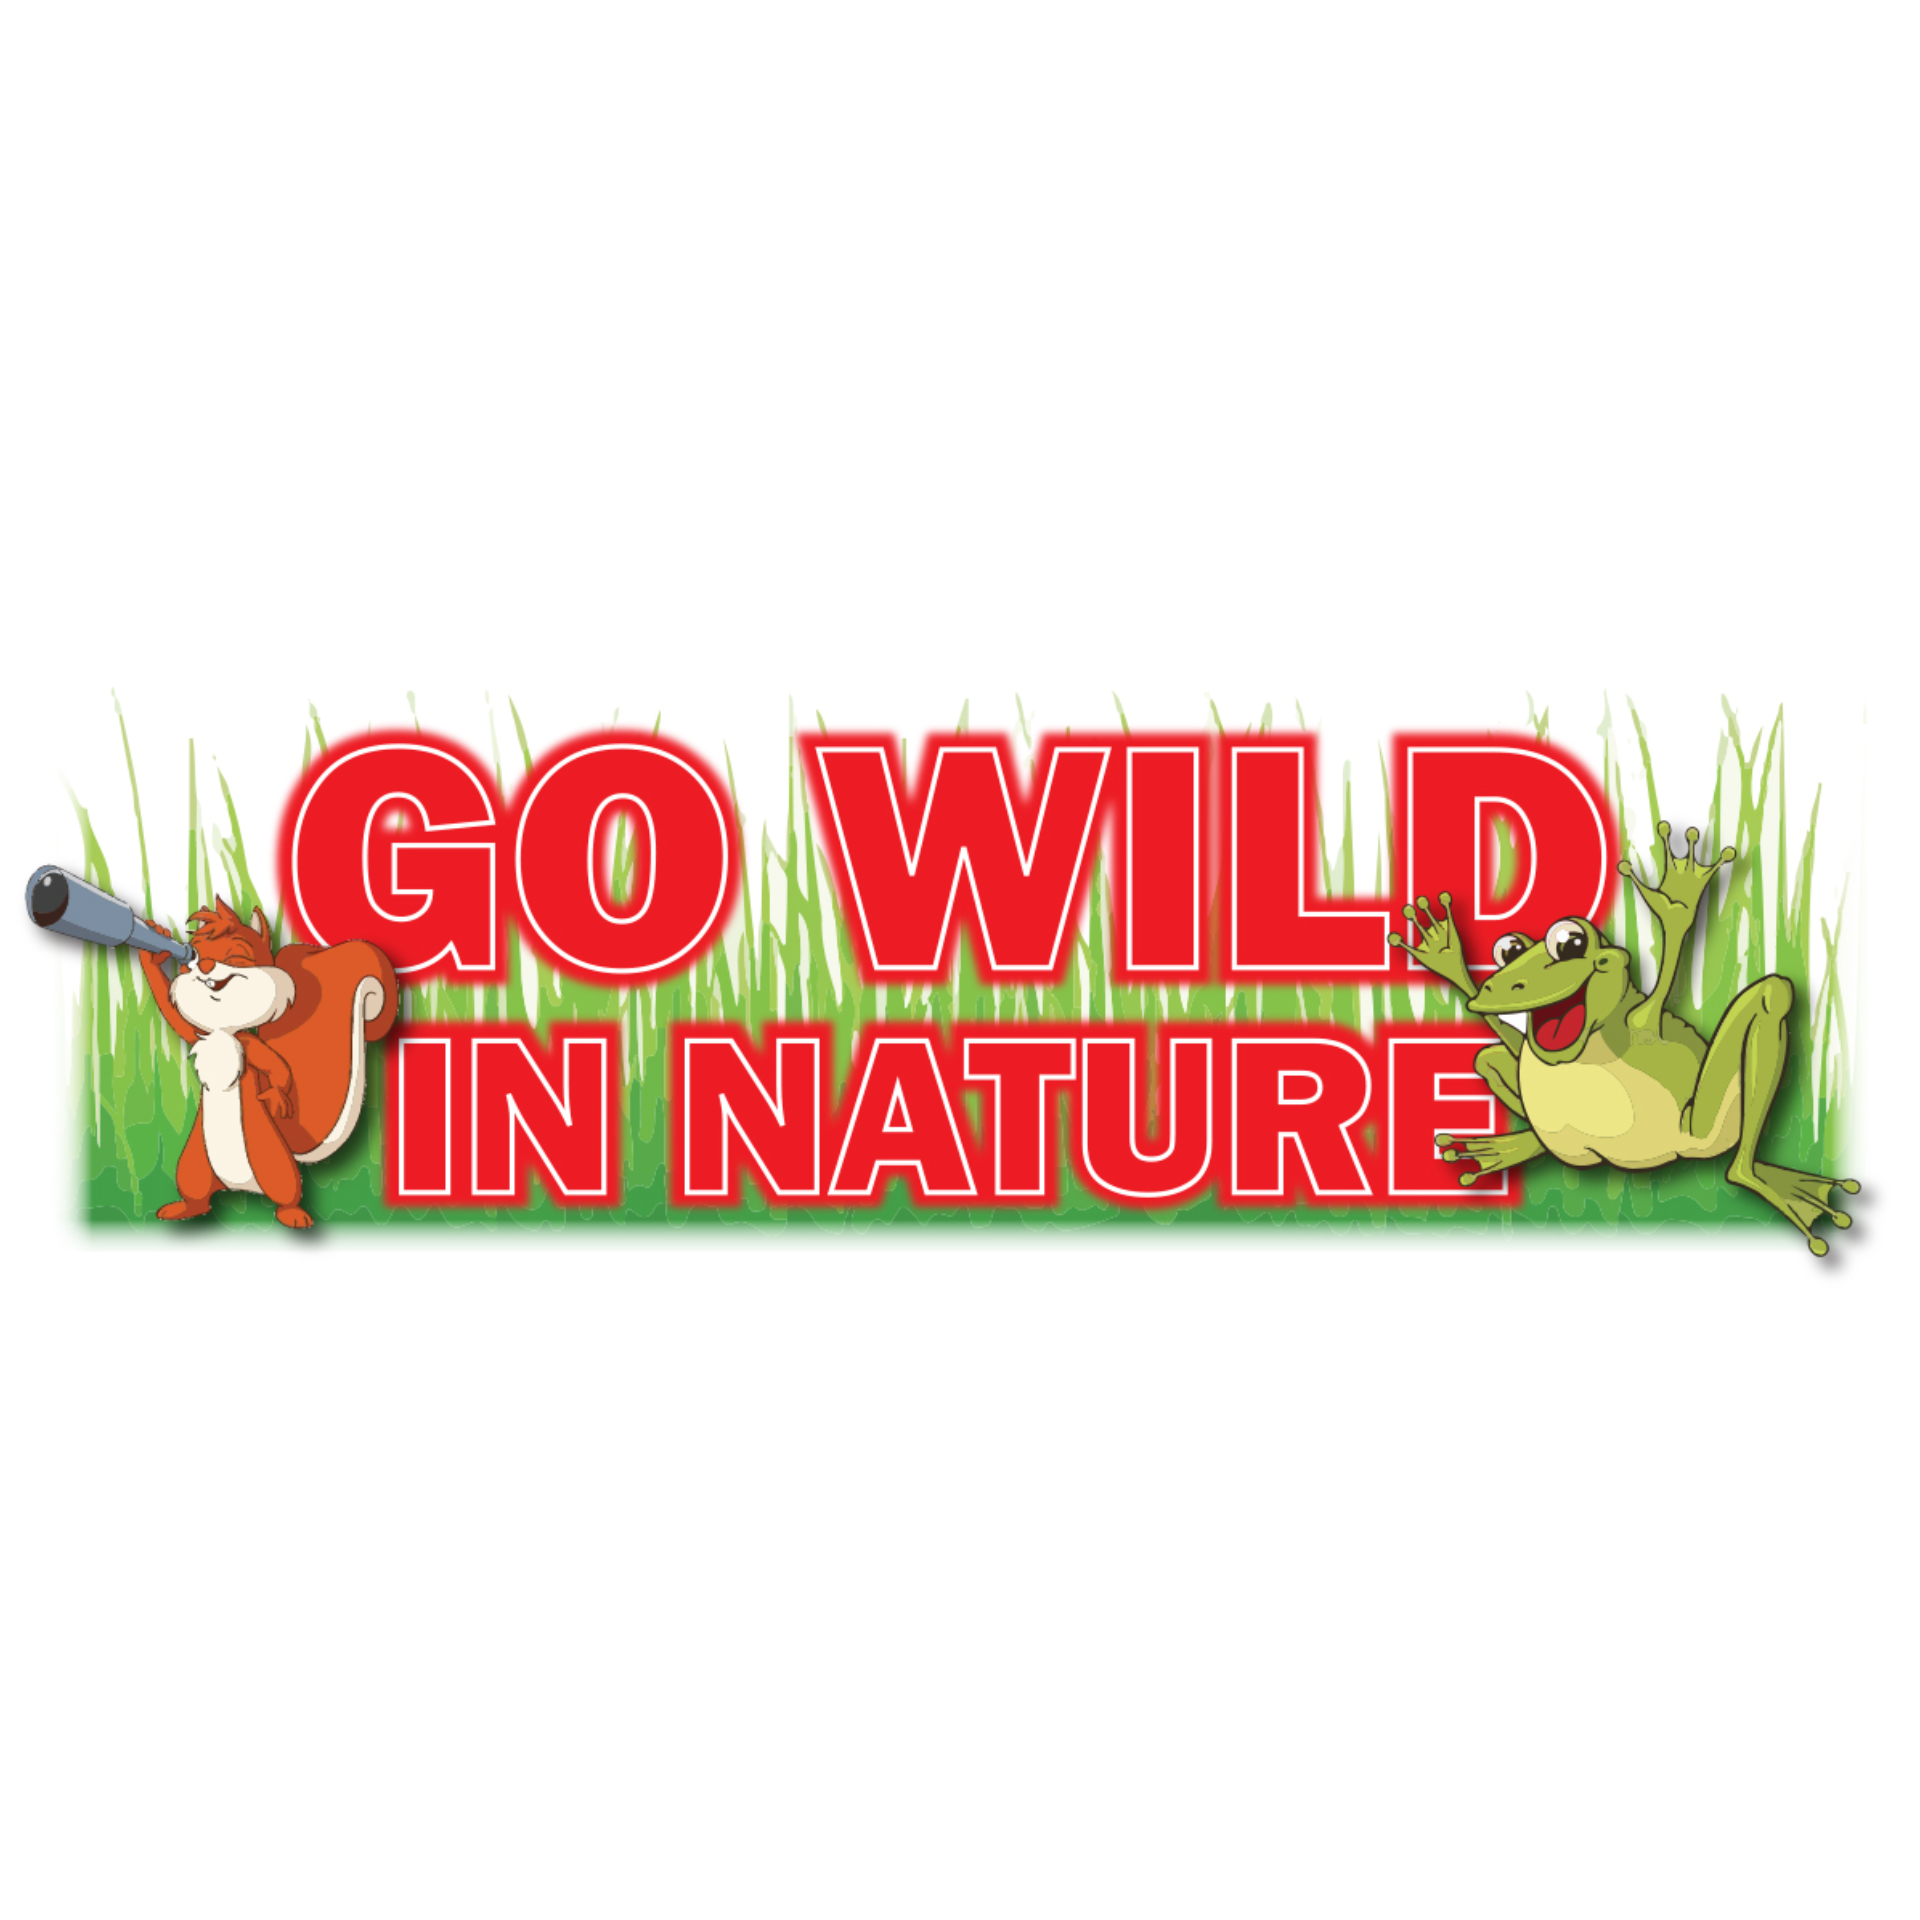 Go Wild in Nature.jpg